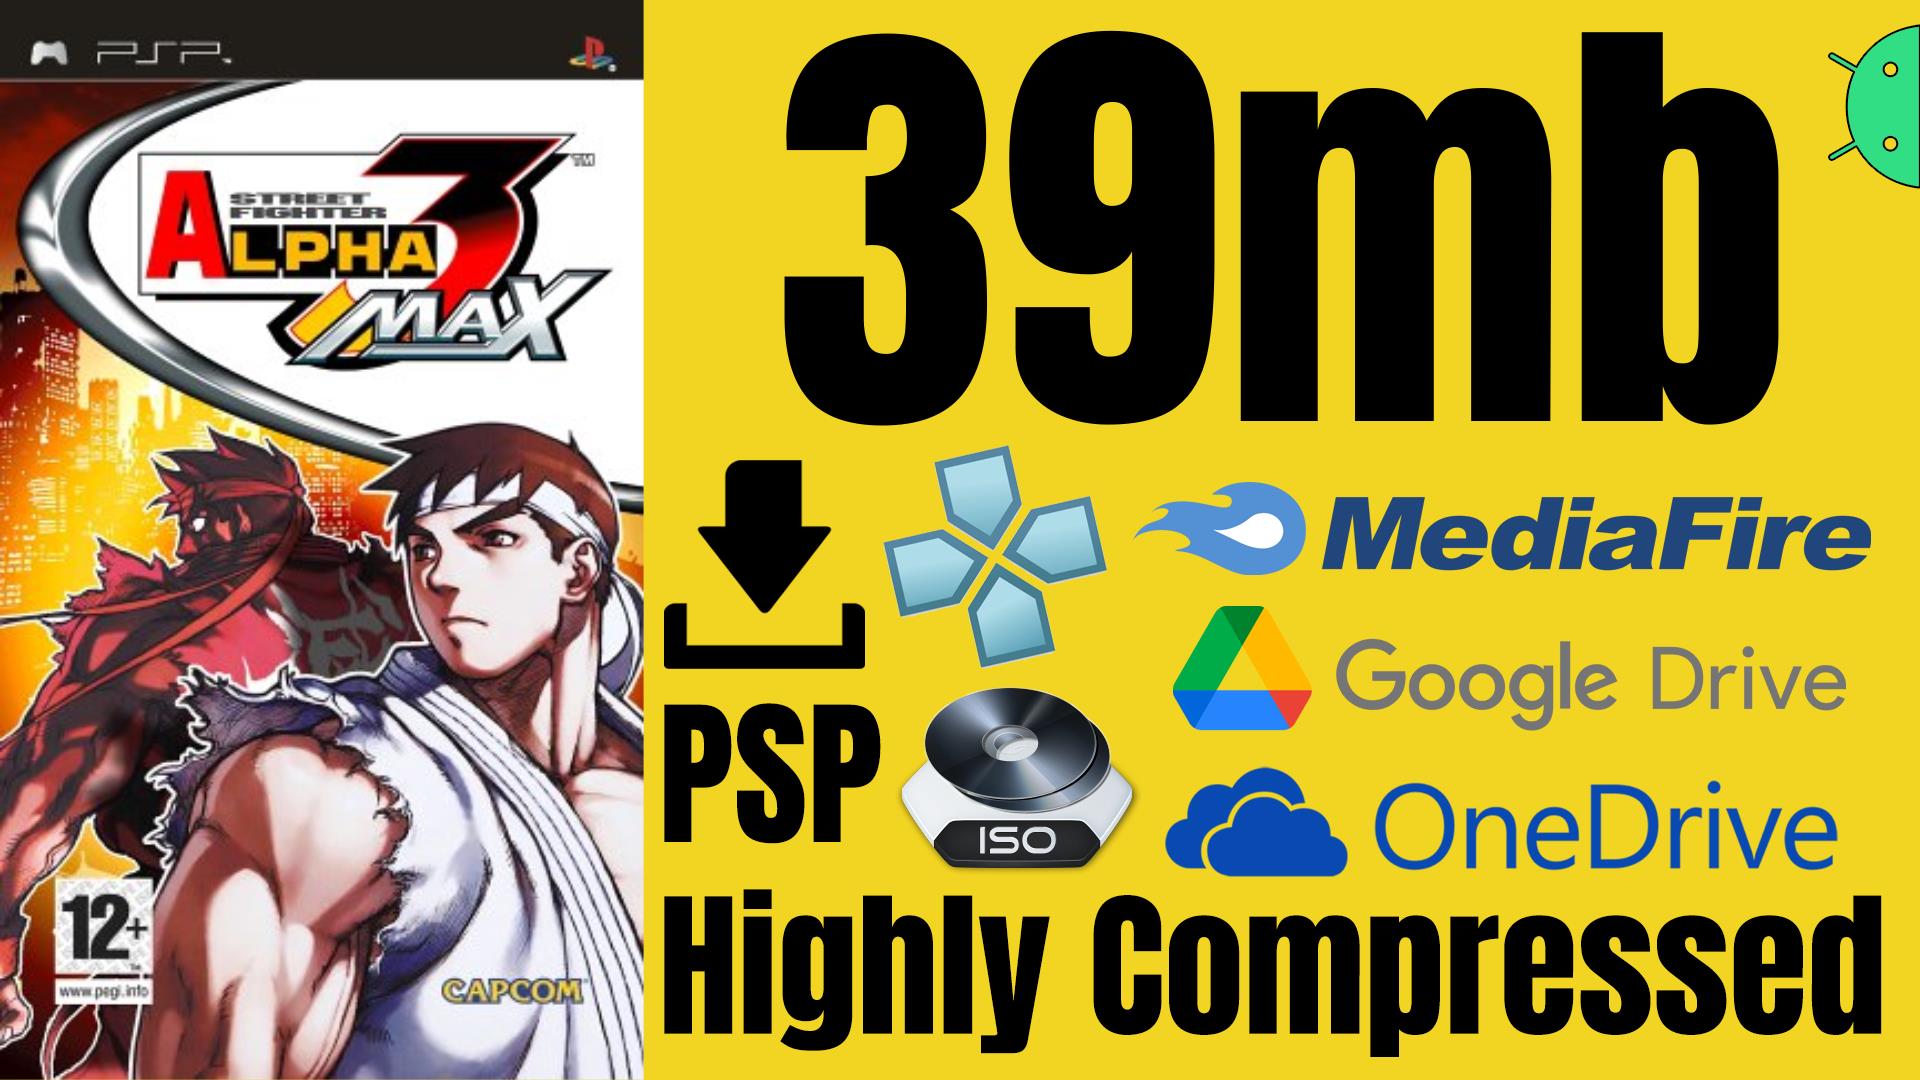 Street Fighter Alpha 3 PSP ISO Highly Compressed Game Download